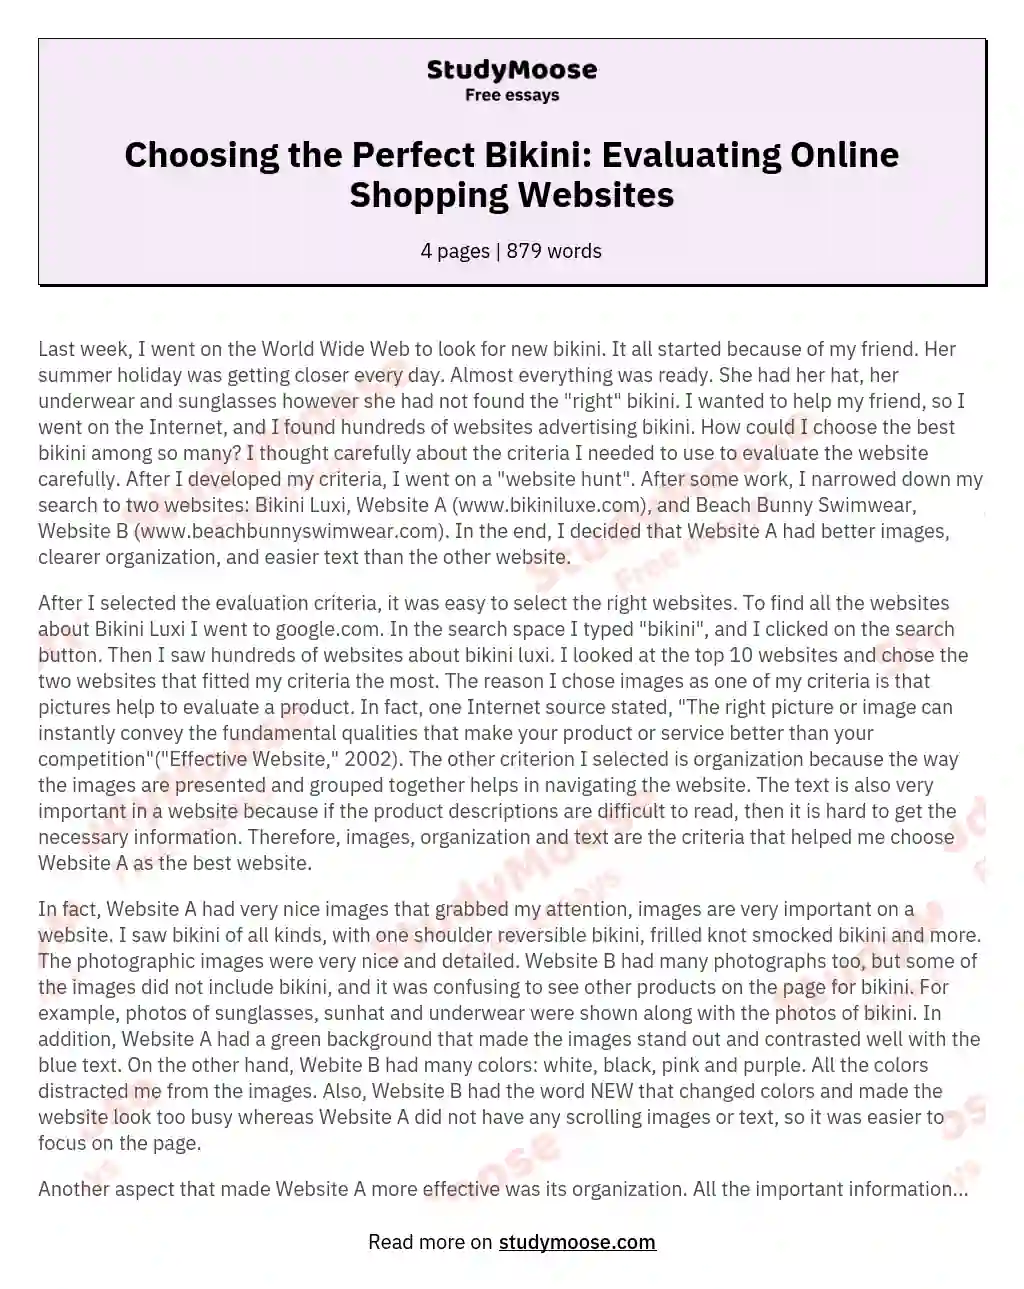 Choosing the Perfect Bikini: Evaluating Online Shopping Websites essay